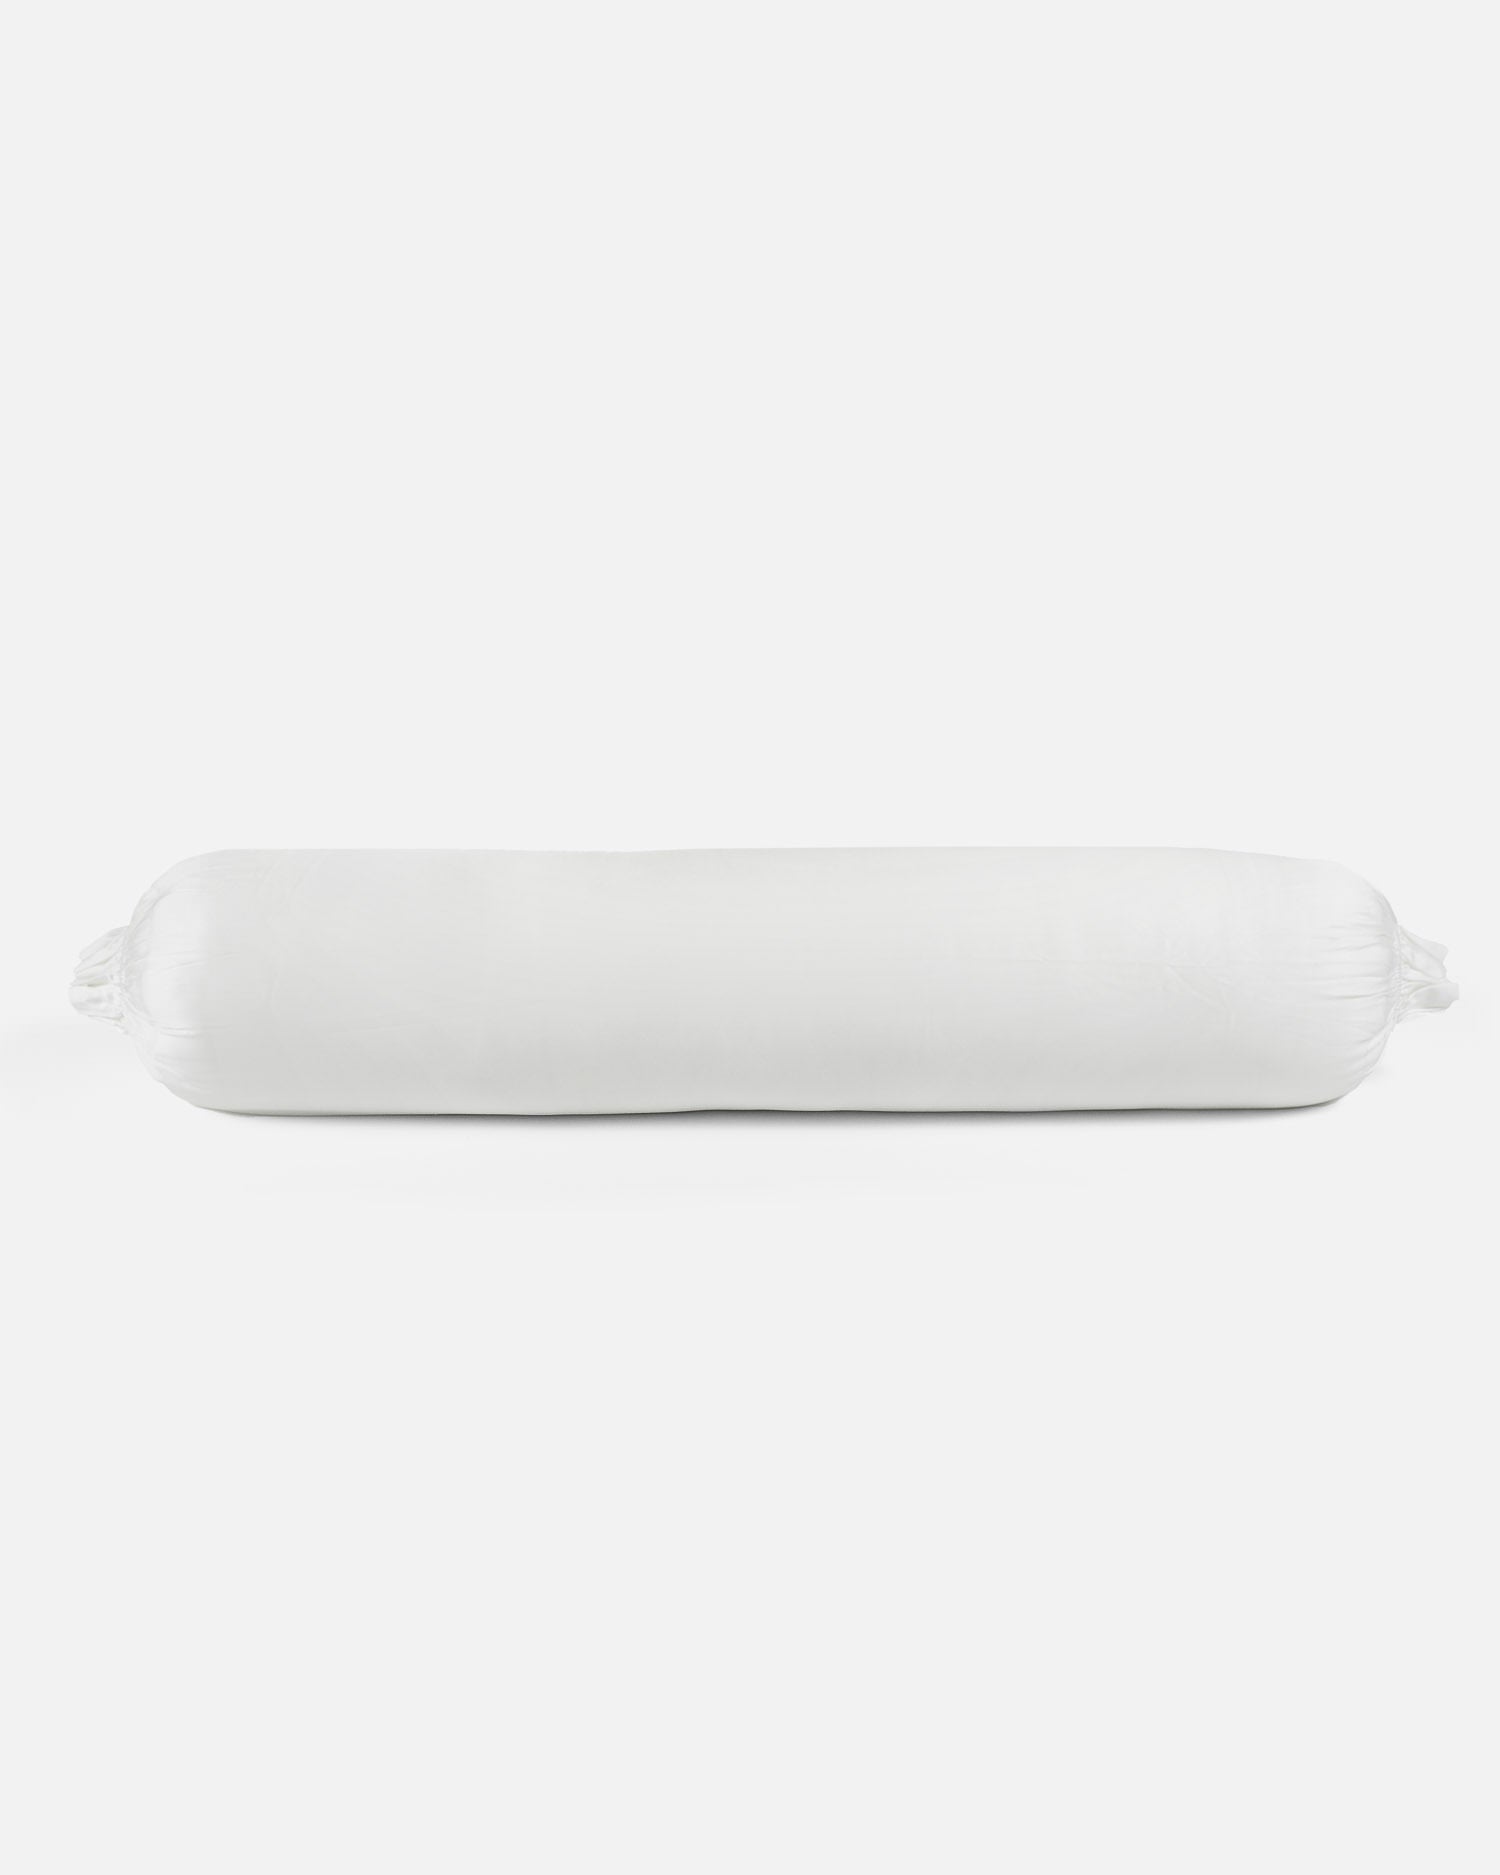 ava and ava ph organic bamboo lyocell bolster case / hotdog pillow / long pillow / po-tsim pillowcase in white